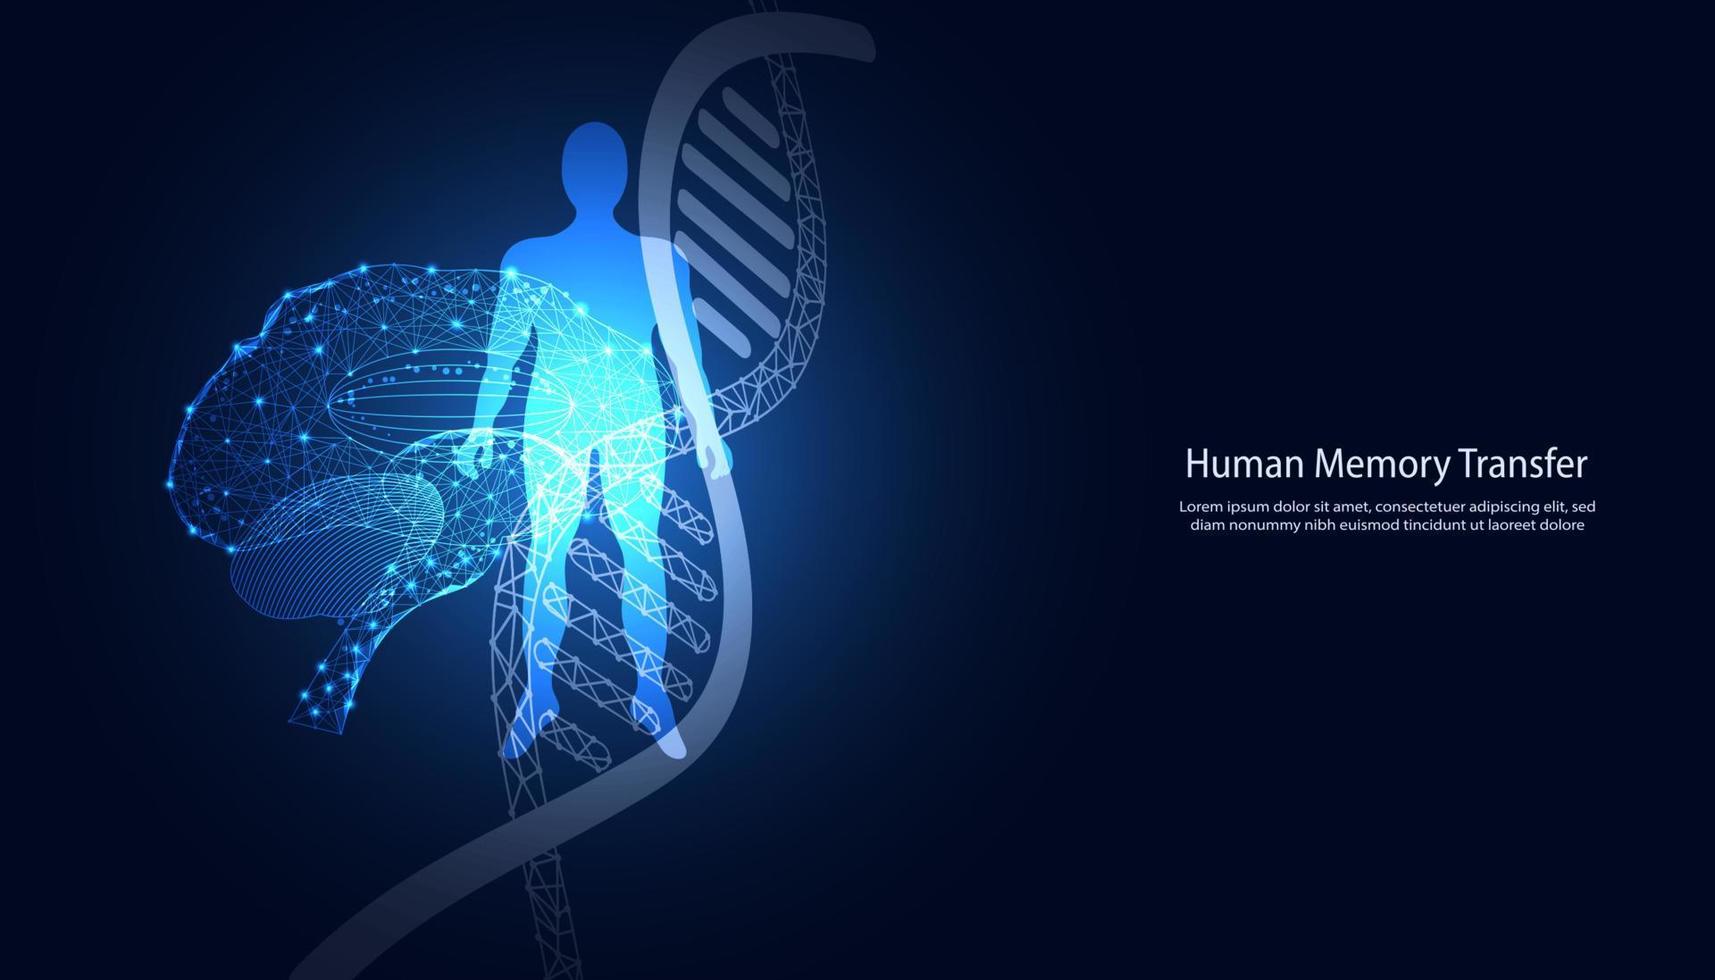 Ilustración humana digital de estructura alámbrica cerebral abstracta y concepto de ADN Transferencia de memoria humana Transmitir recuerdos de persona a persona a nivel celular vector